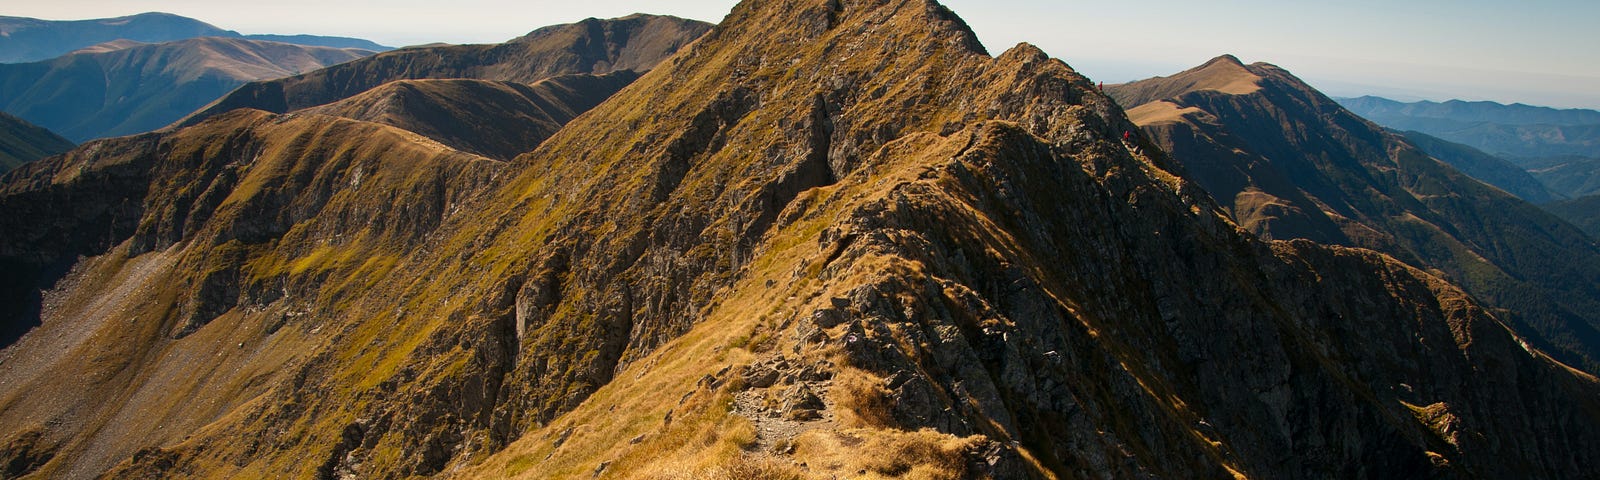 A mountain ridge